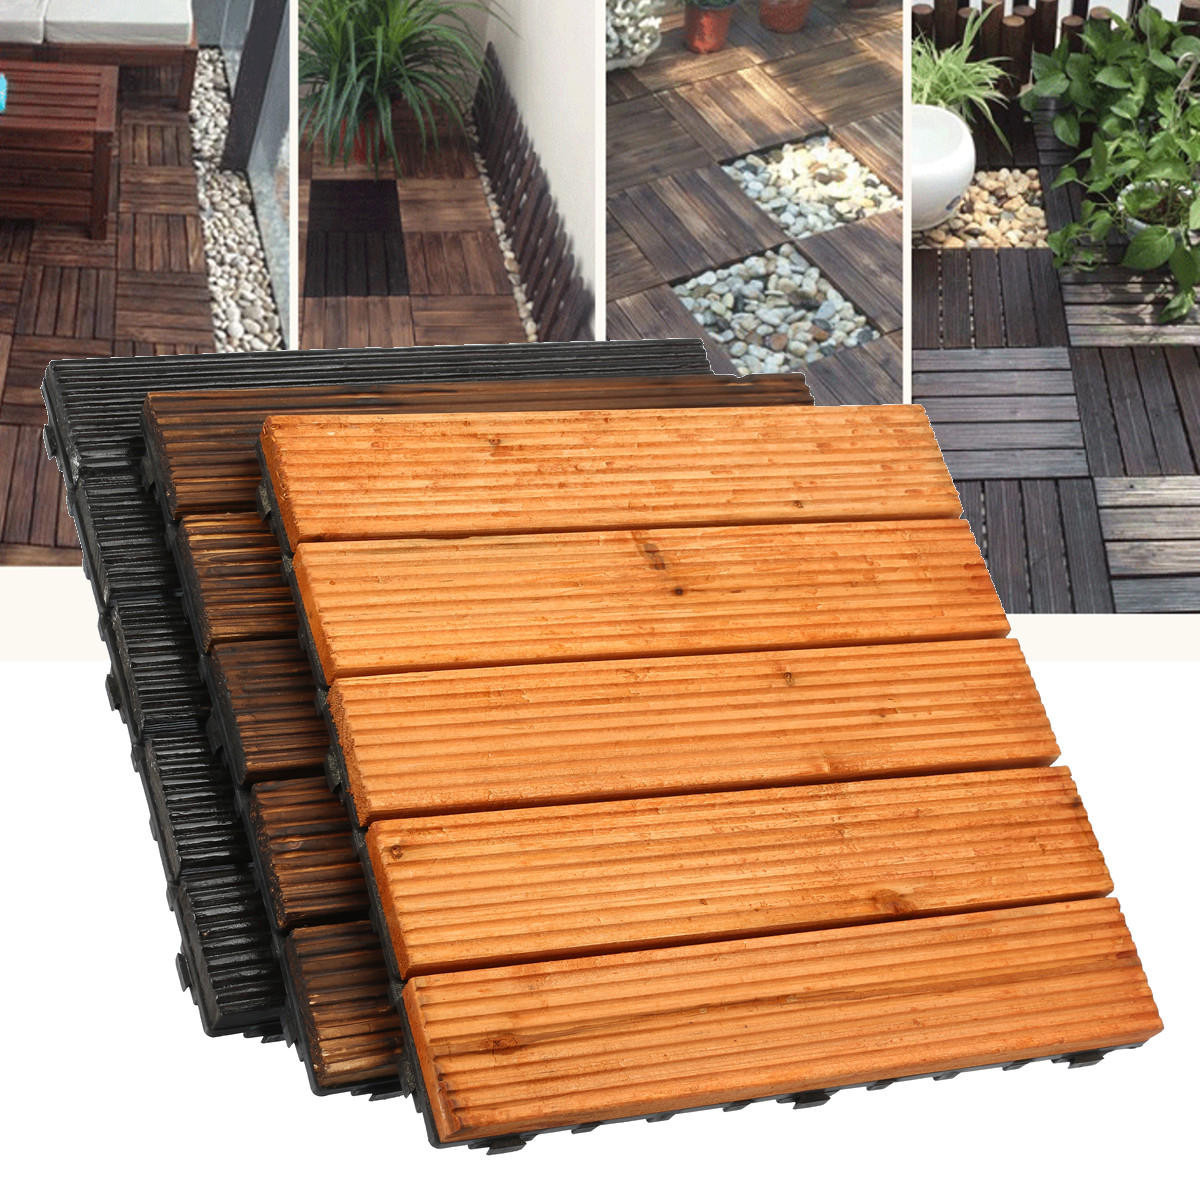 DIY Outdoor Flooring
 30x30cm diy wood patio interlocking flooring decking tile